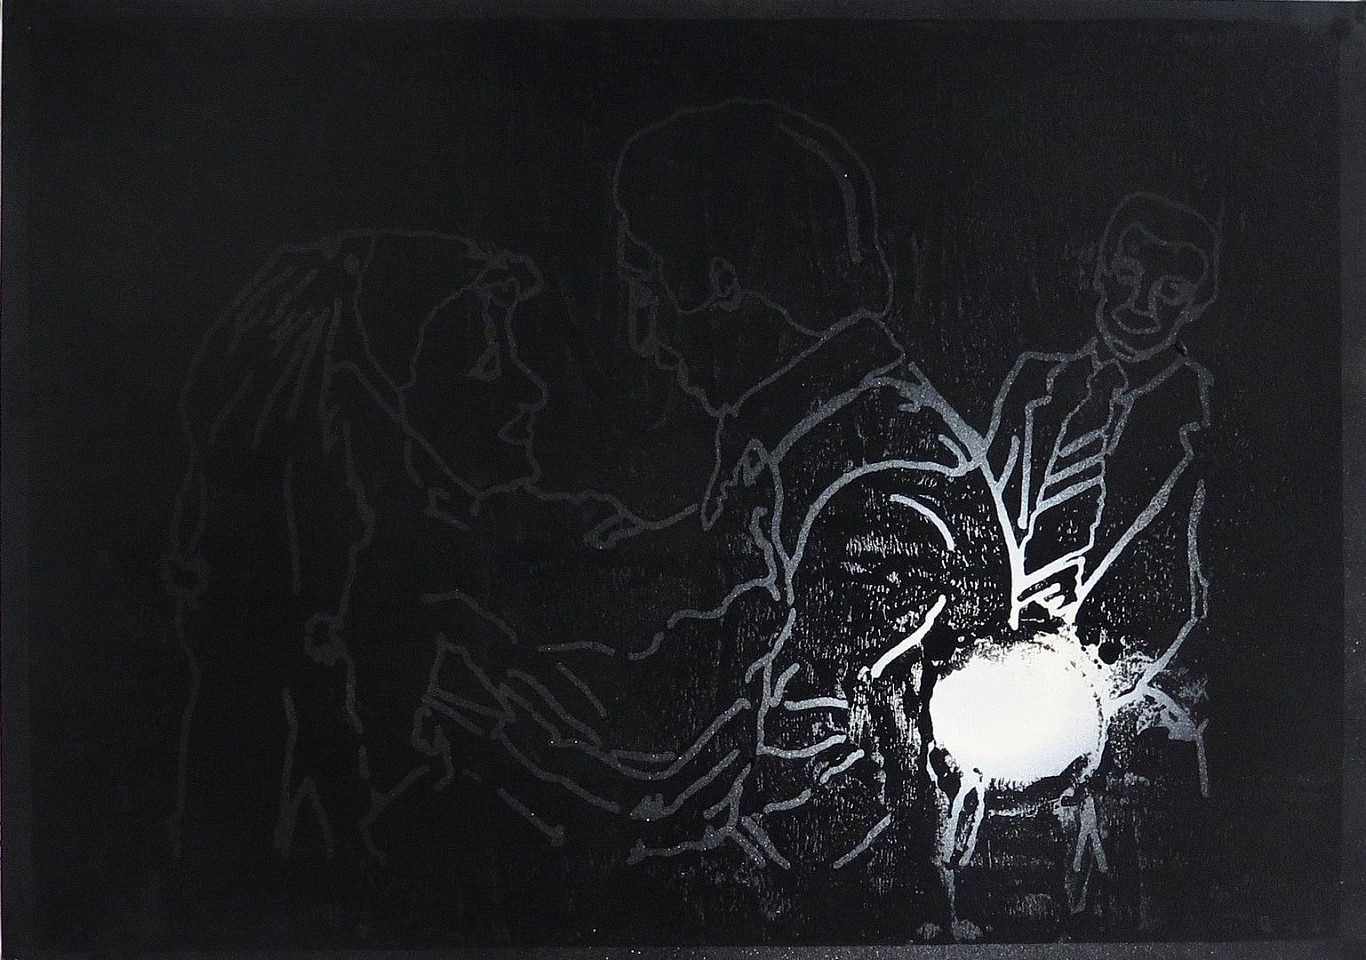 Elham Rokni, White Flashlight Eclipse #4
2015, Monoprint, acrylic and spray paint on paper